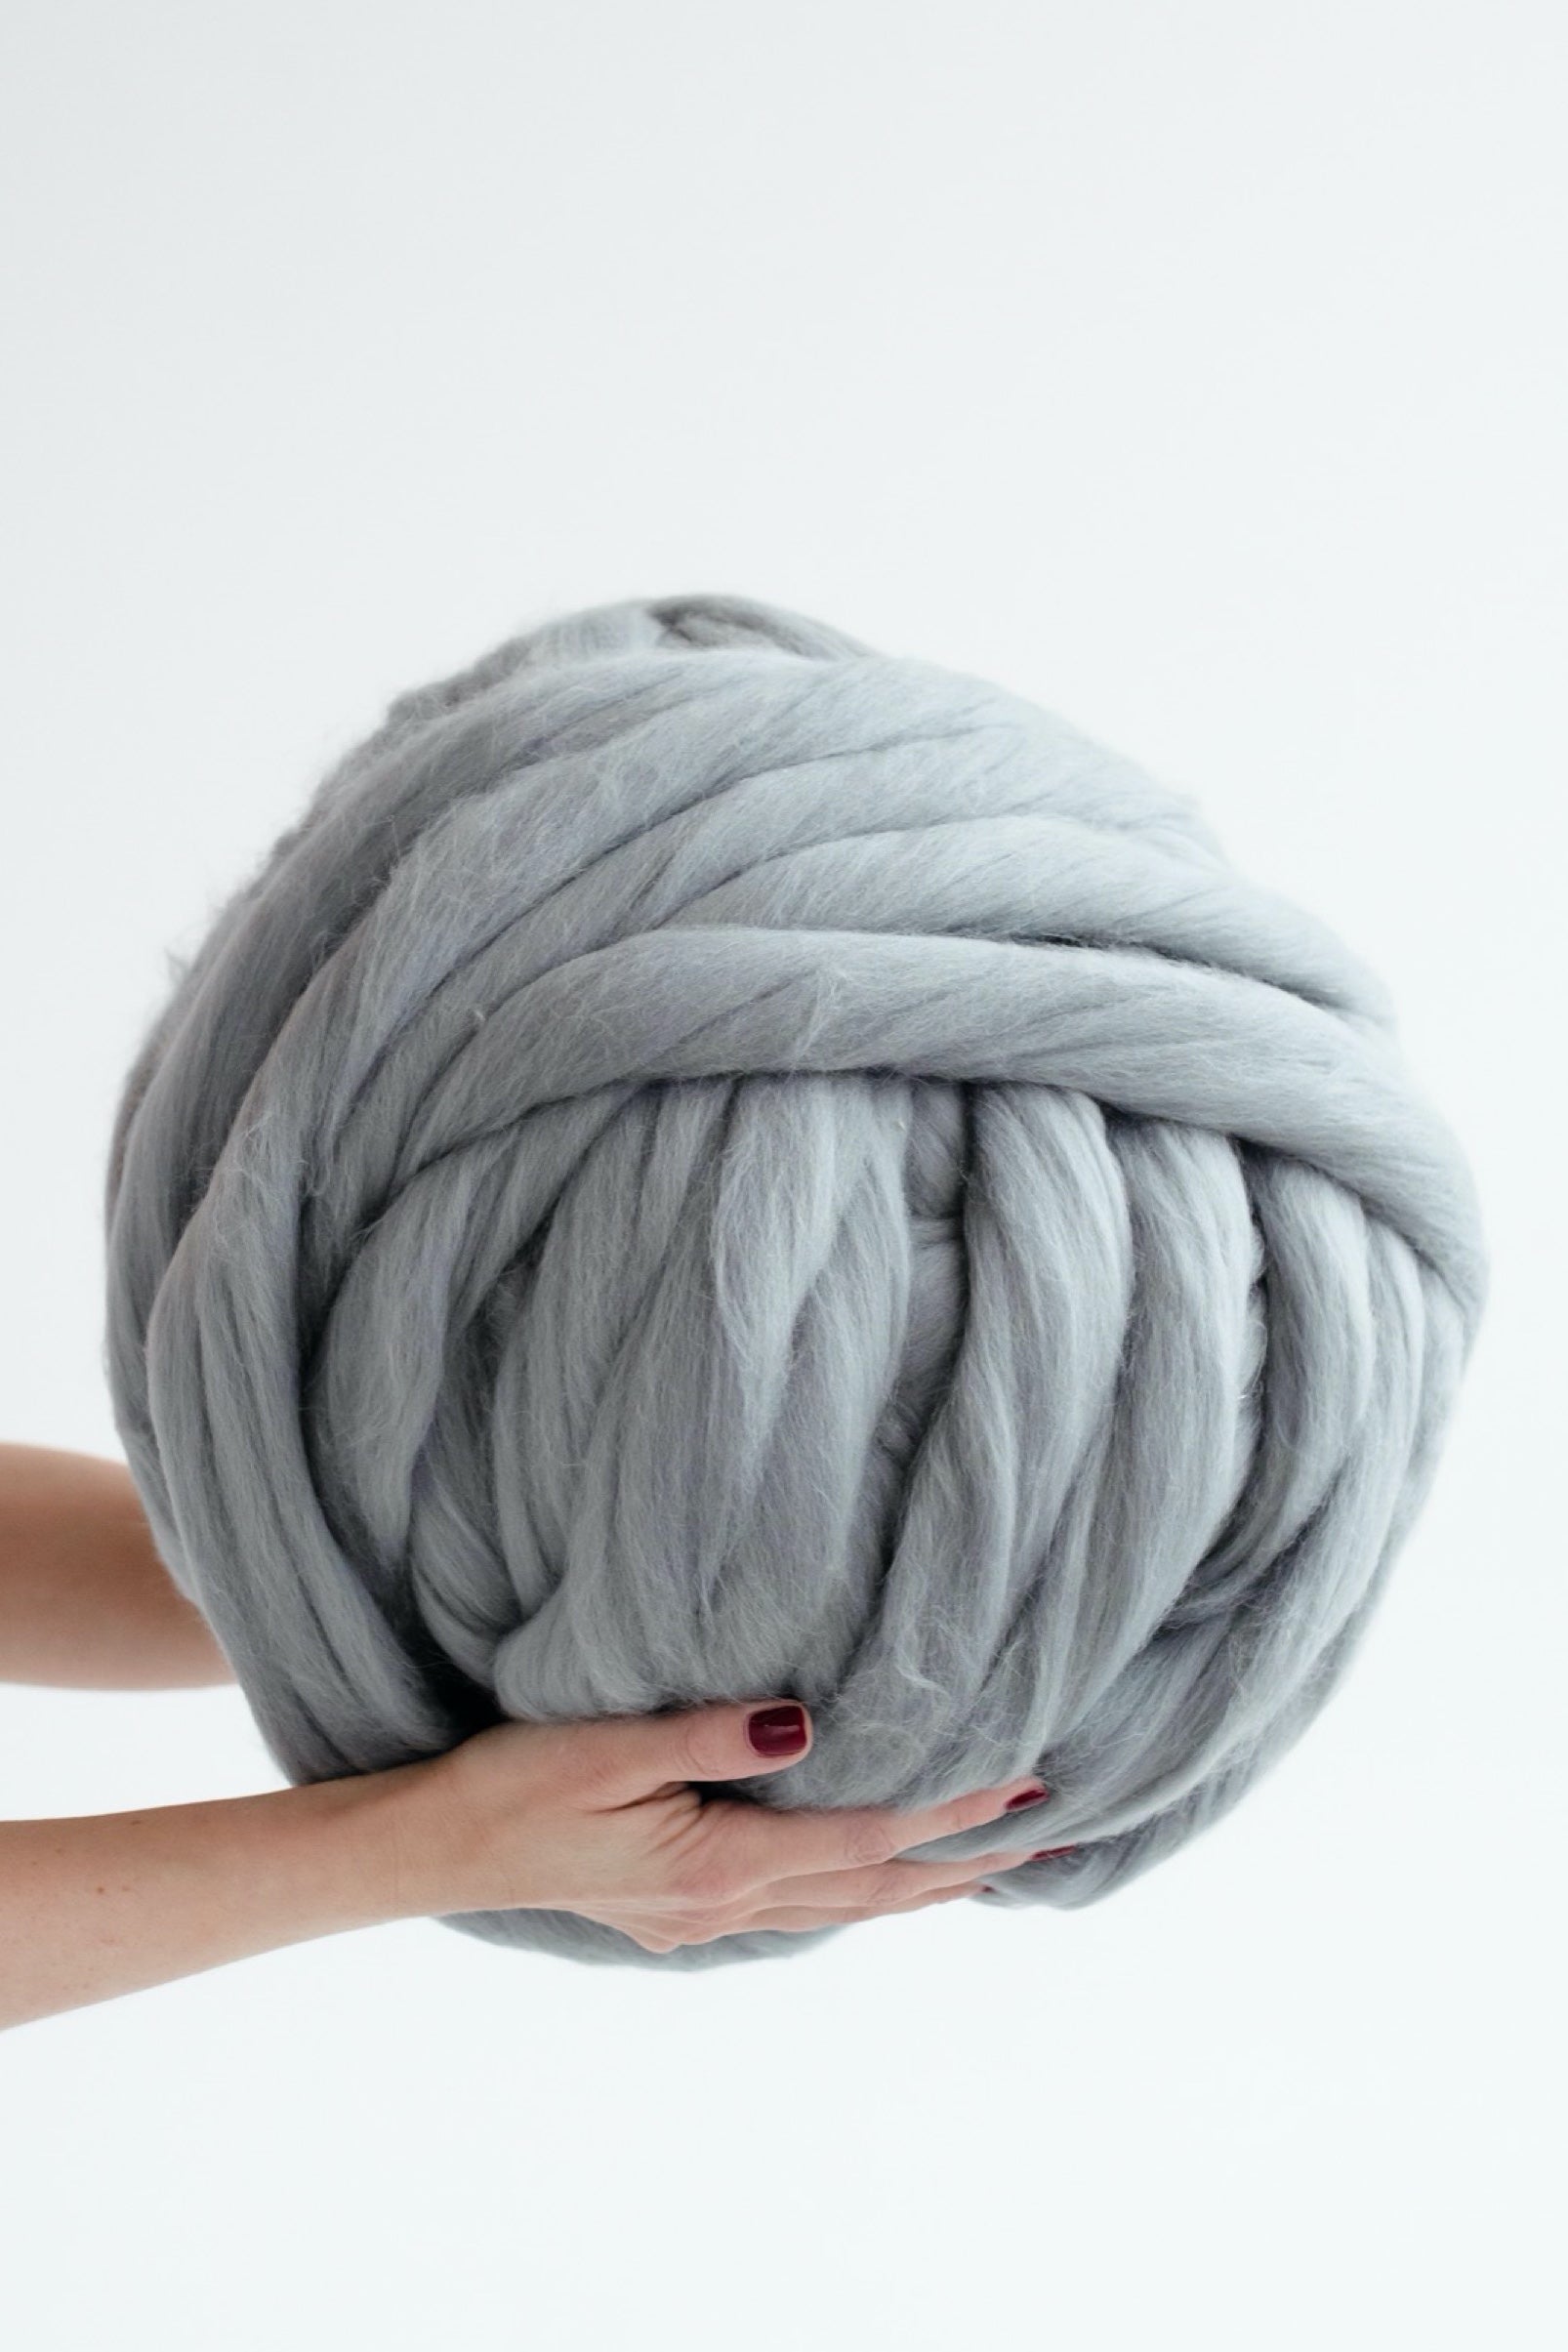 Coarse YarnArm Knitting Yarn 250g Light Grey Chunky Yarn for